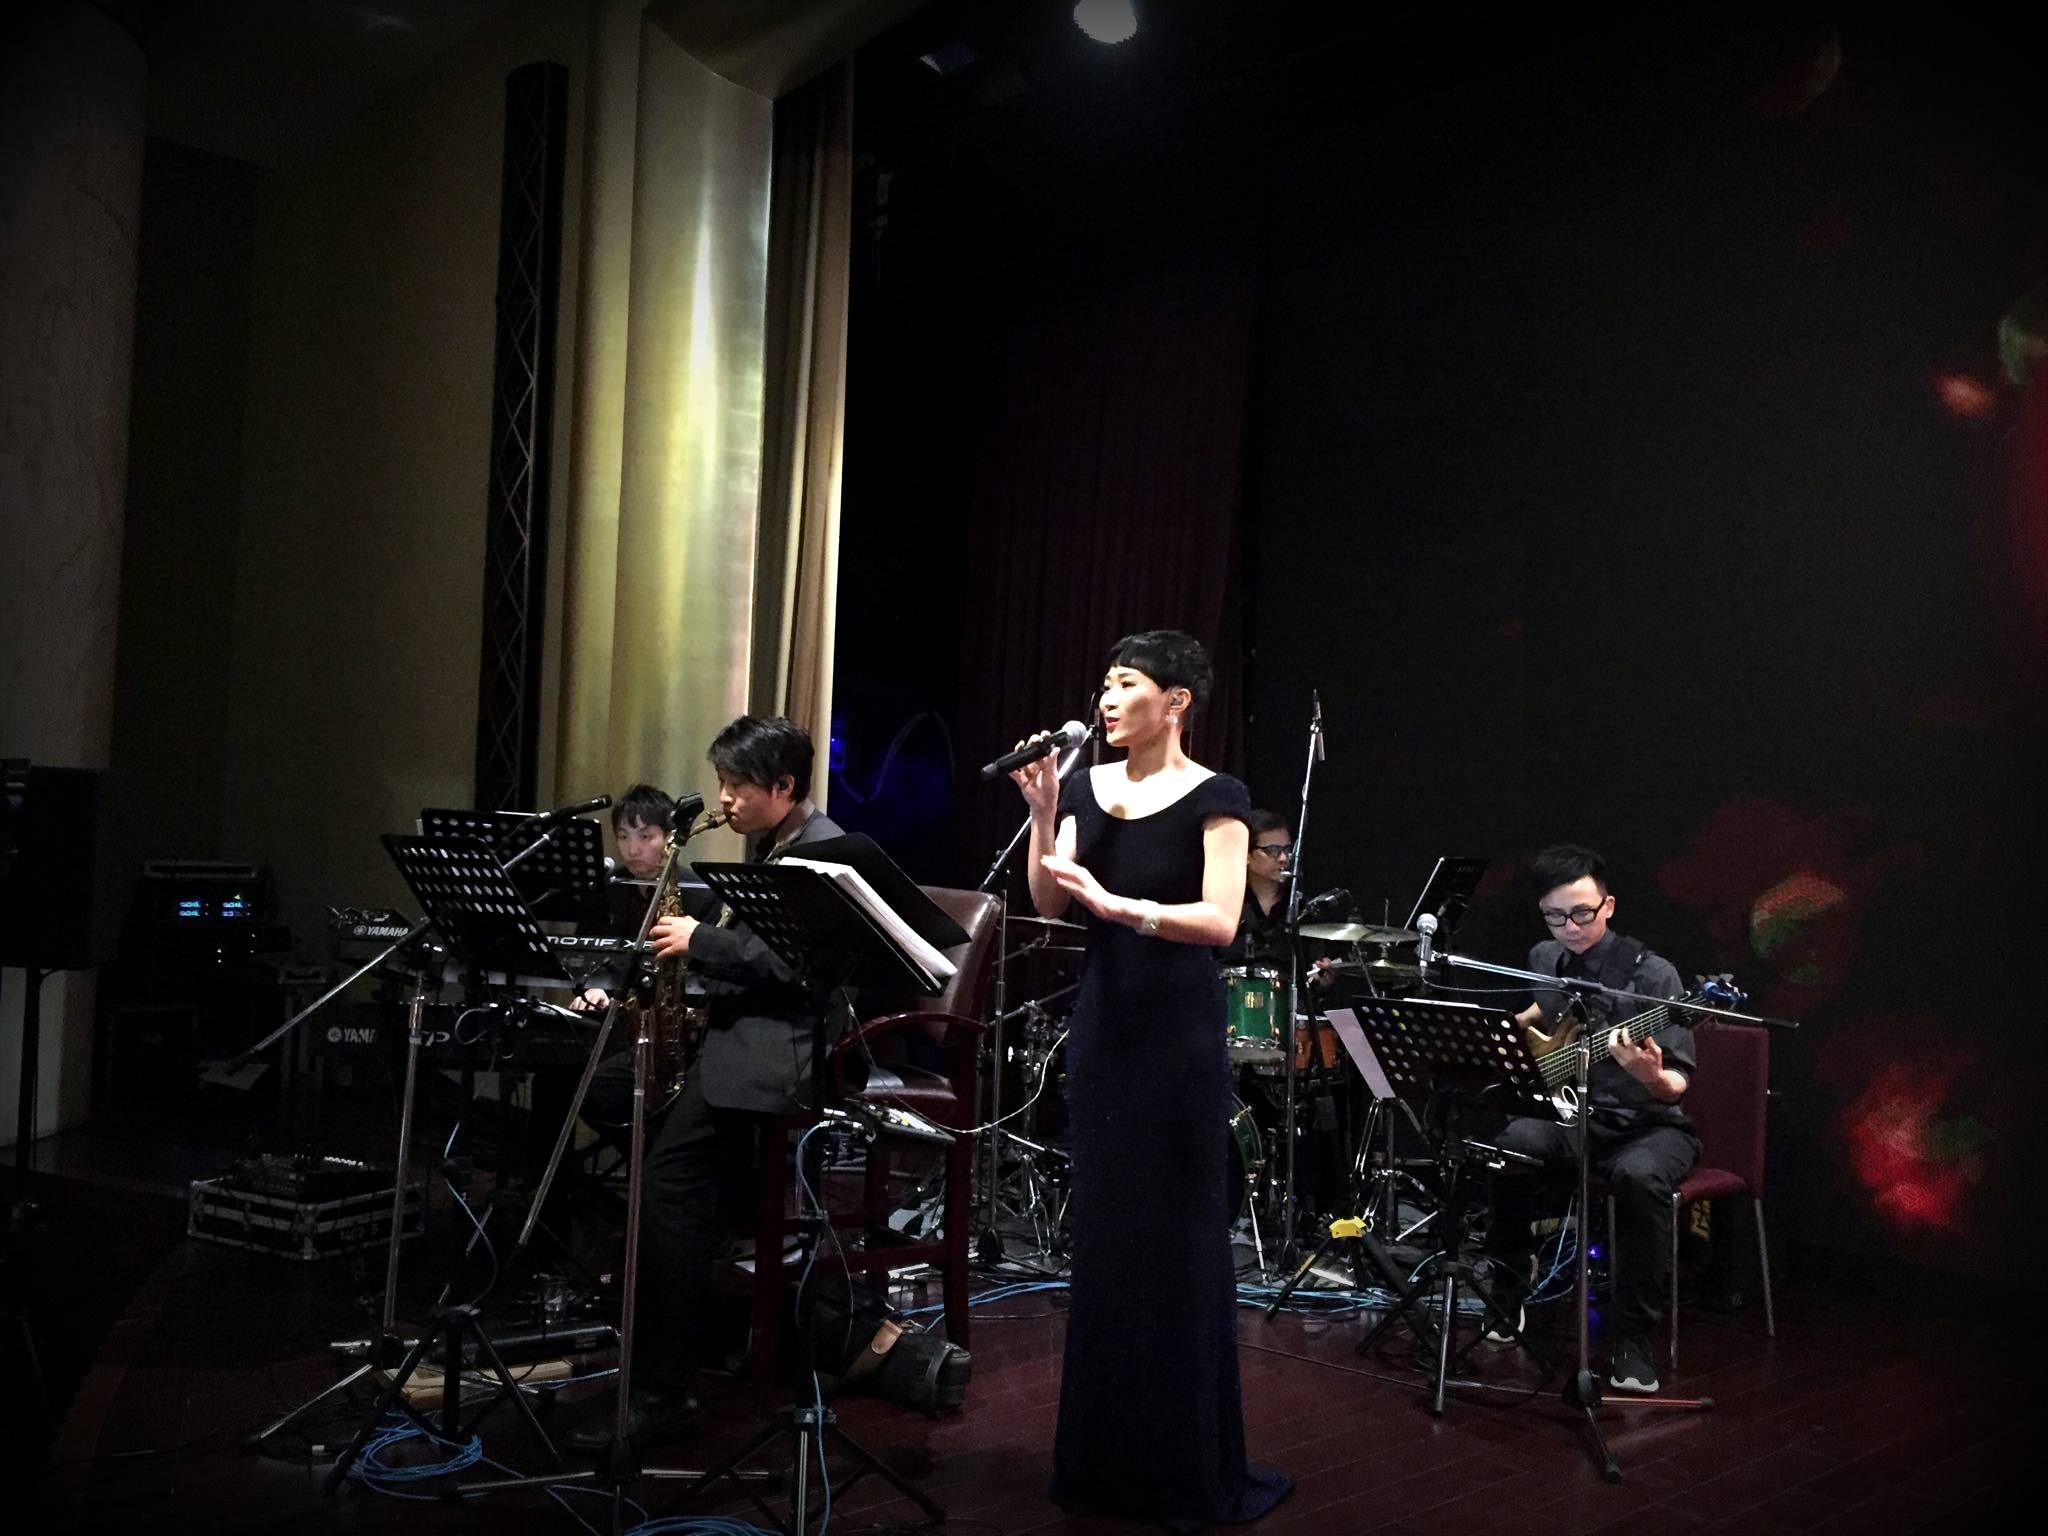 Unison Production Live Music band performance - Wedding in The Grand Hyatt, 21 Nov,2015